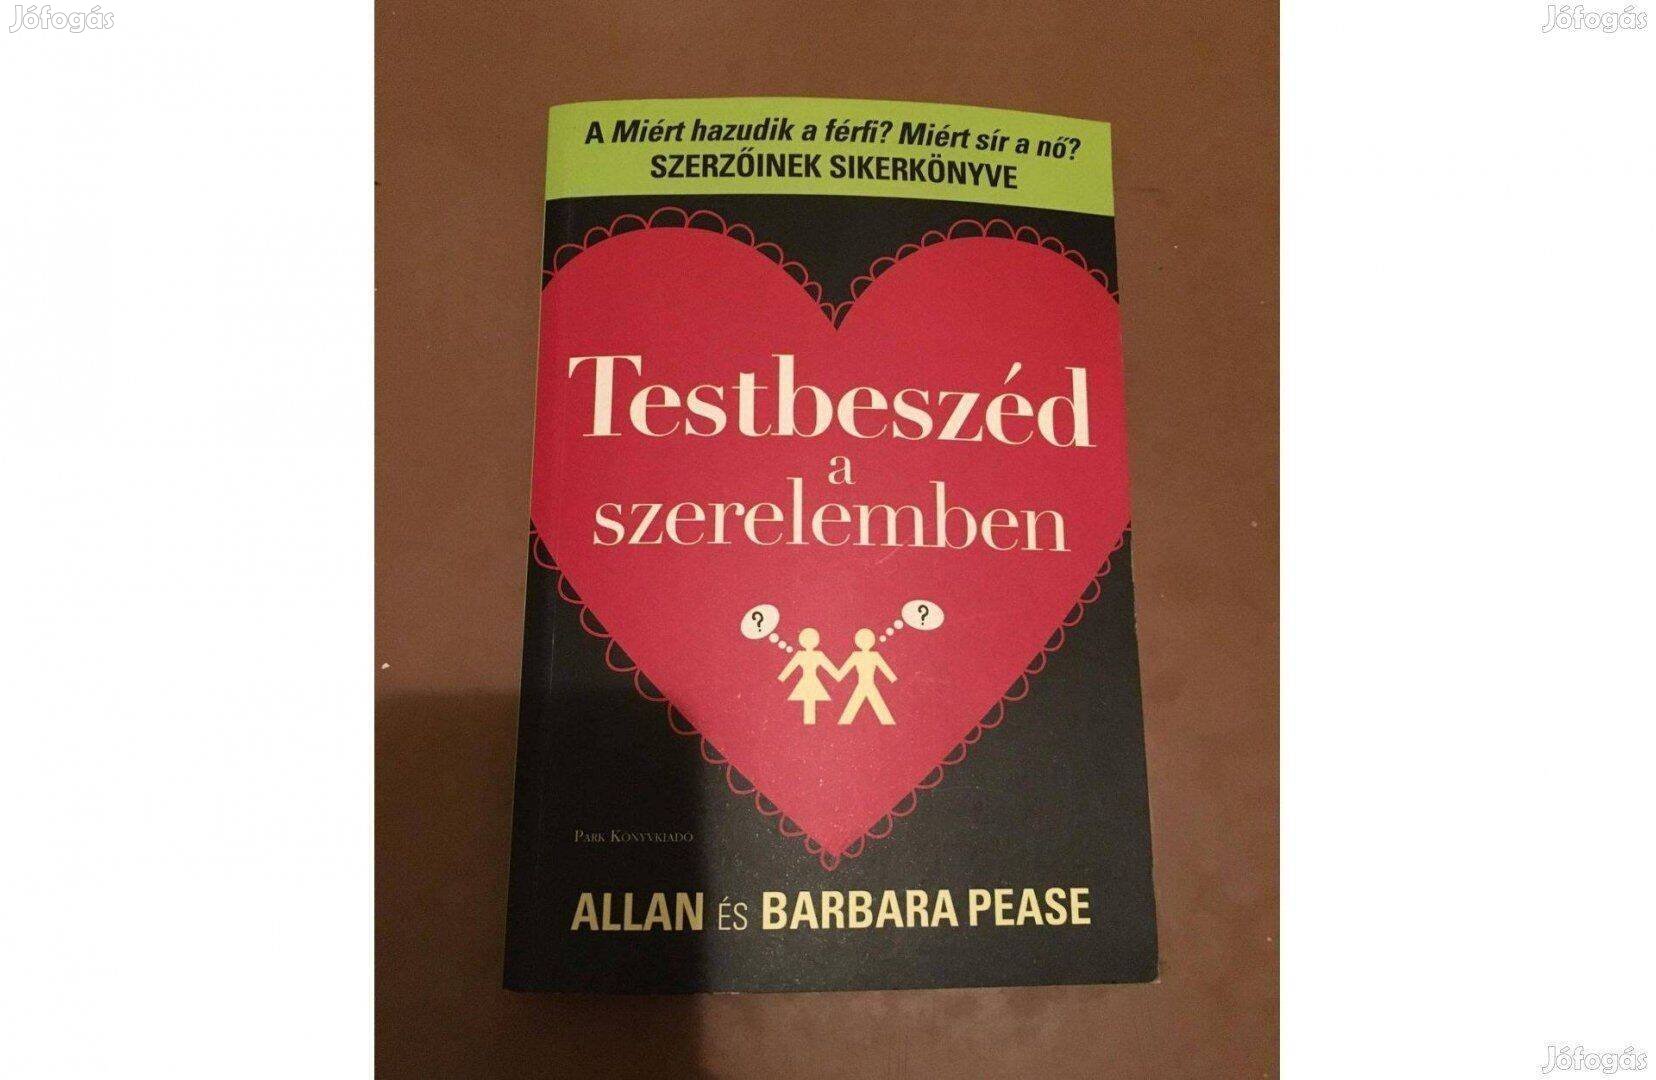 Arbara Pease Allan Pease Testbeszéd könyv